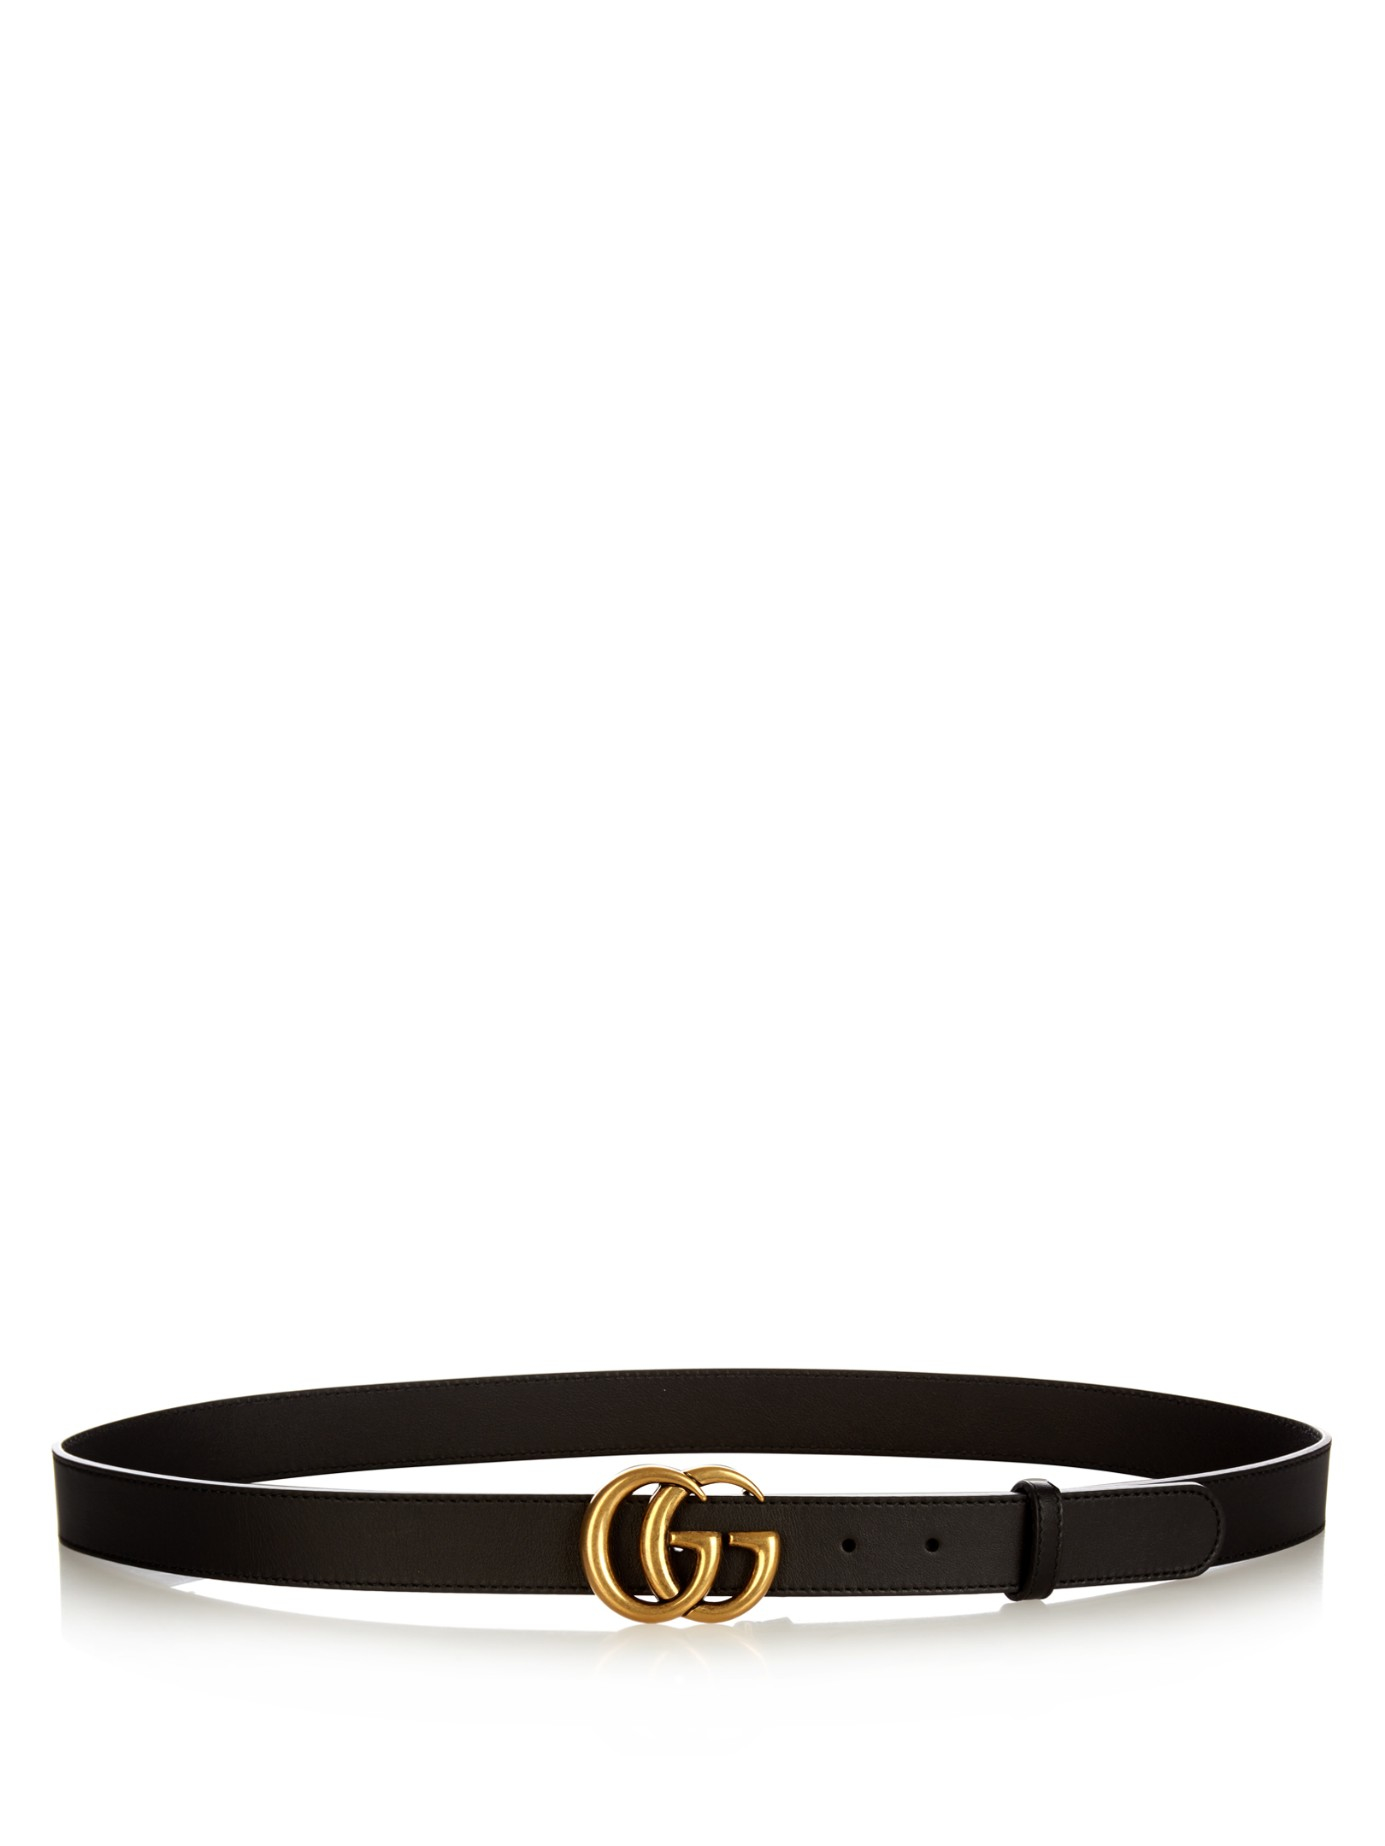 Gucci Gg-logo Leather 3cm Belt in Black for Men - Lyst